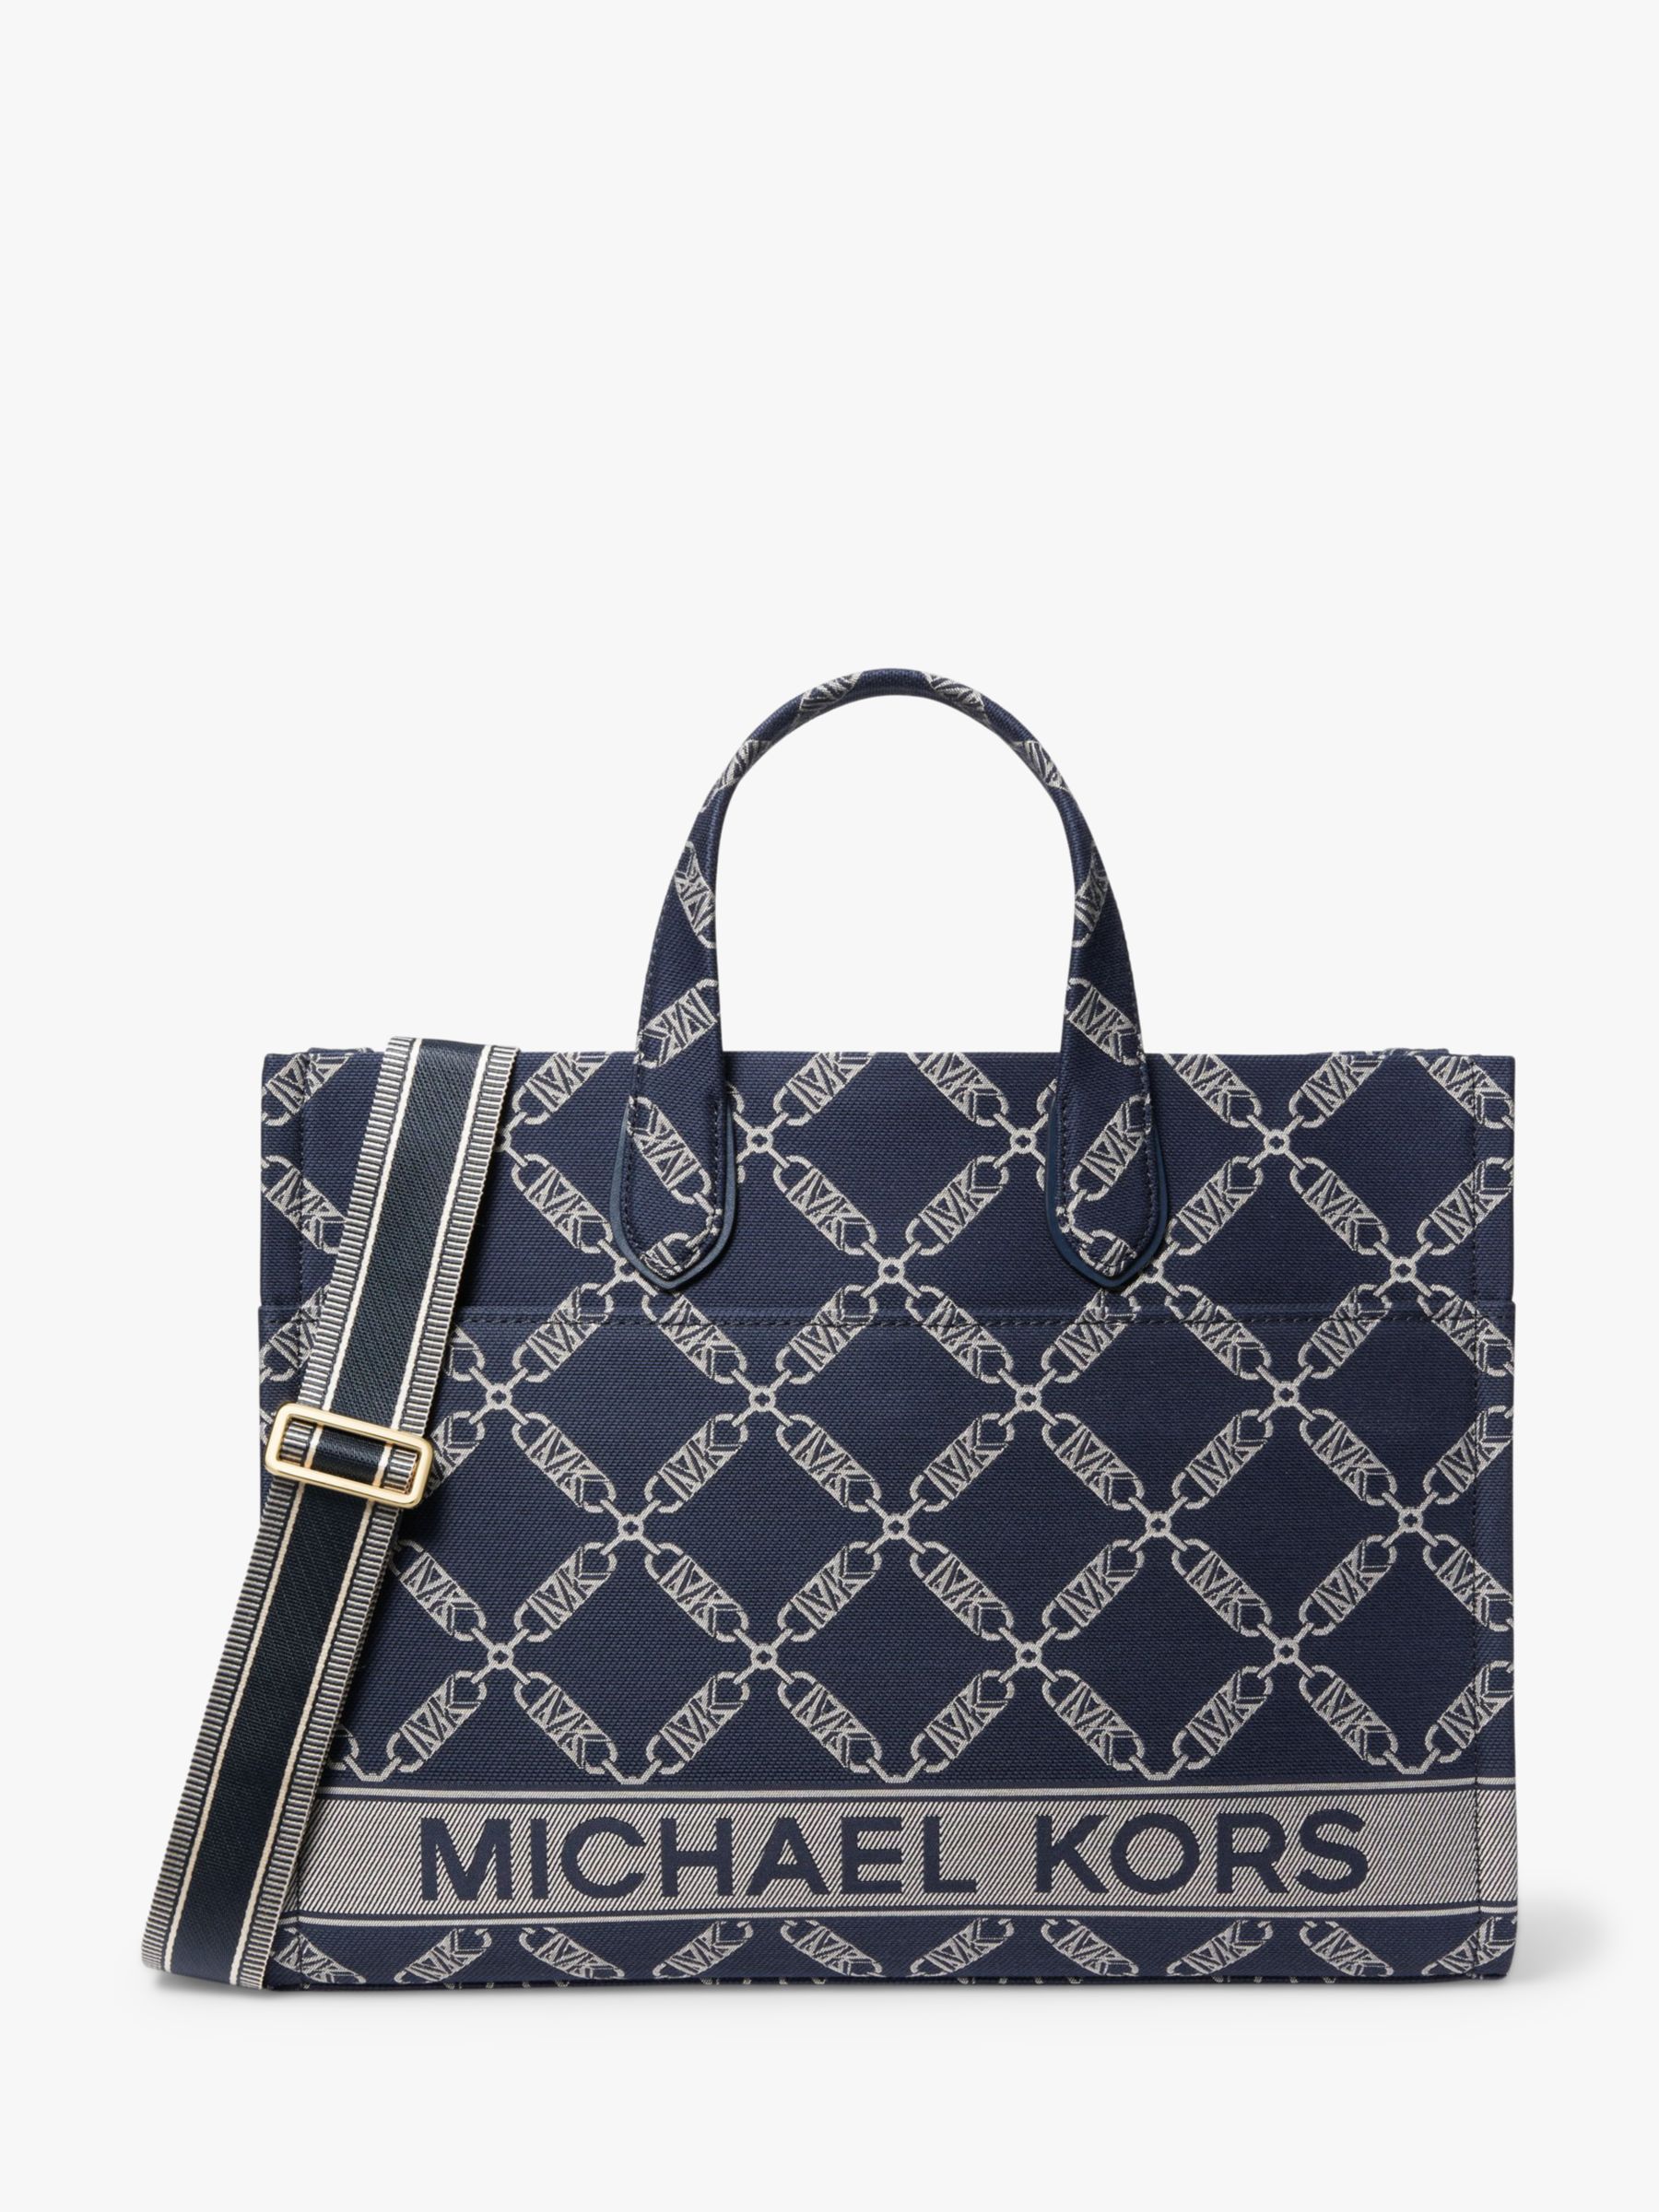 New original Mk purse  Mk purse, Purses, Michael kors monogram